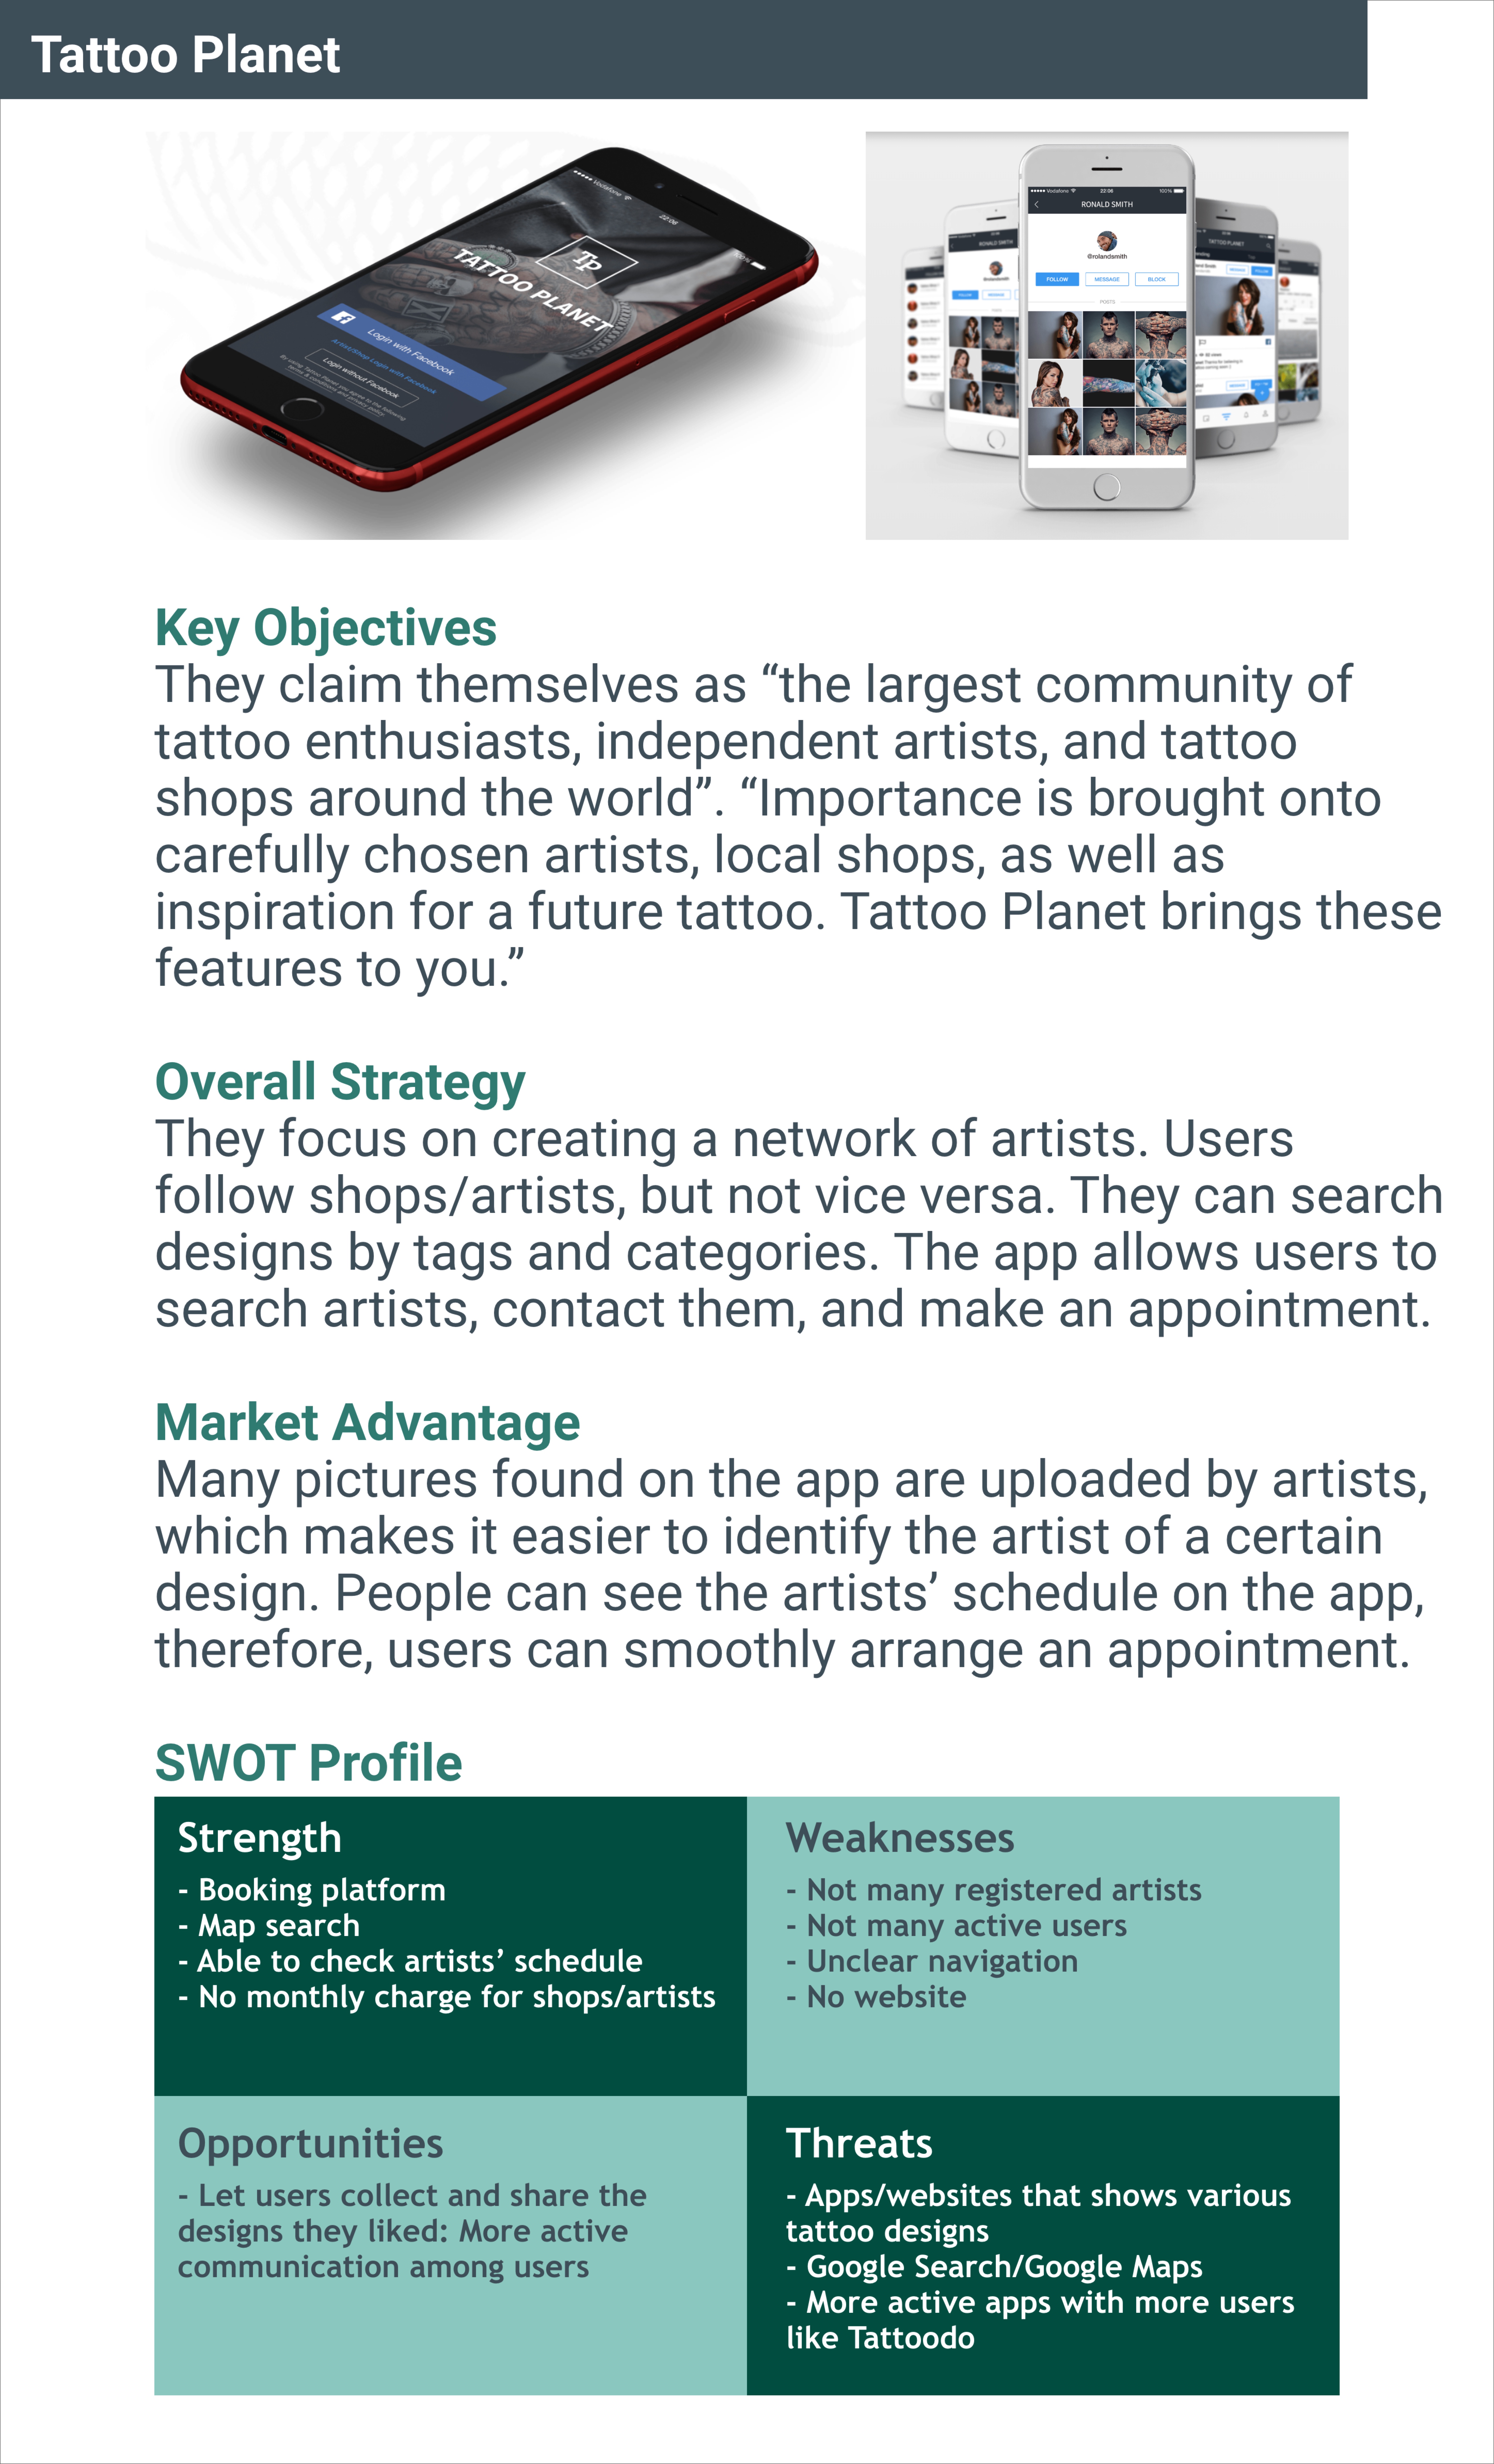 Buy 2 Geometric Tattoo Galaxy Tattoo Planet Tattoo Half Tattoo Sleeve  Forearm Tattoo Men Temporary Tattoo Sleeve Tatouage Temporaire Tätowierung  Online in India - Etsy